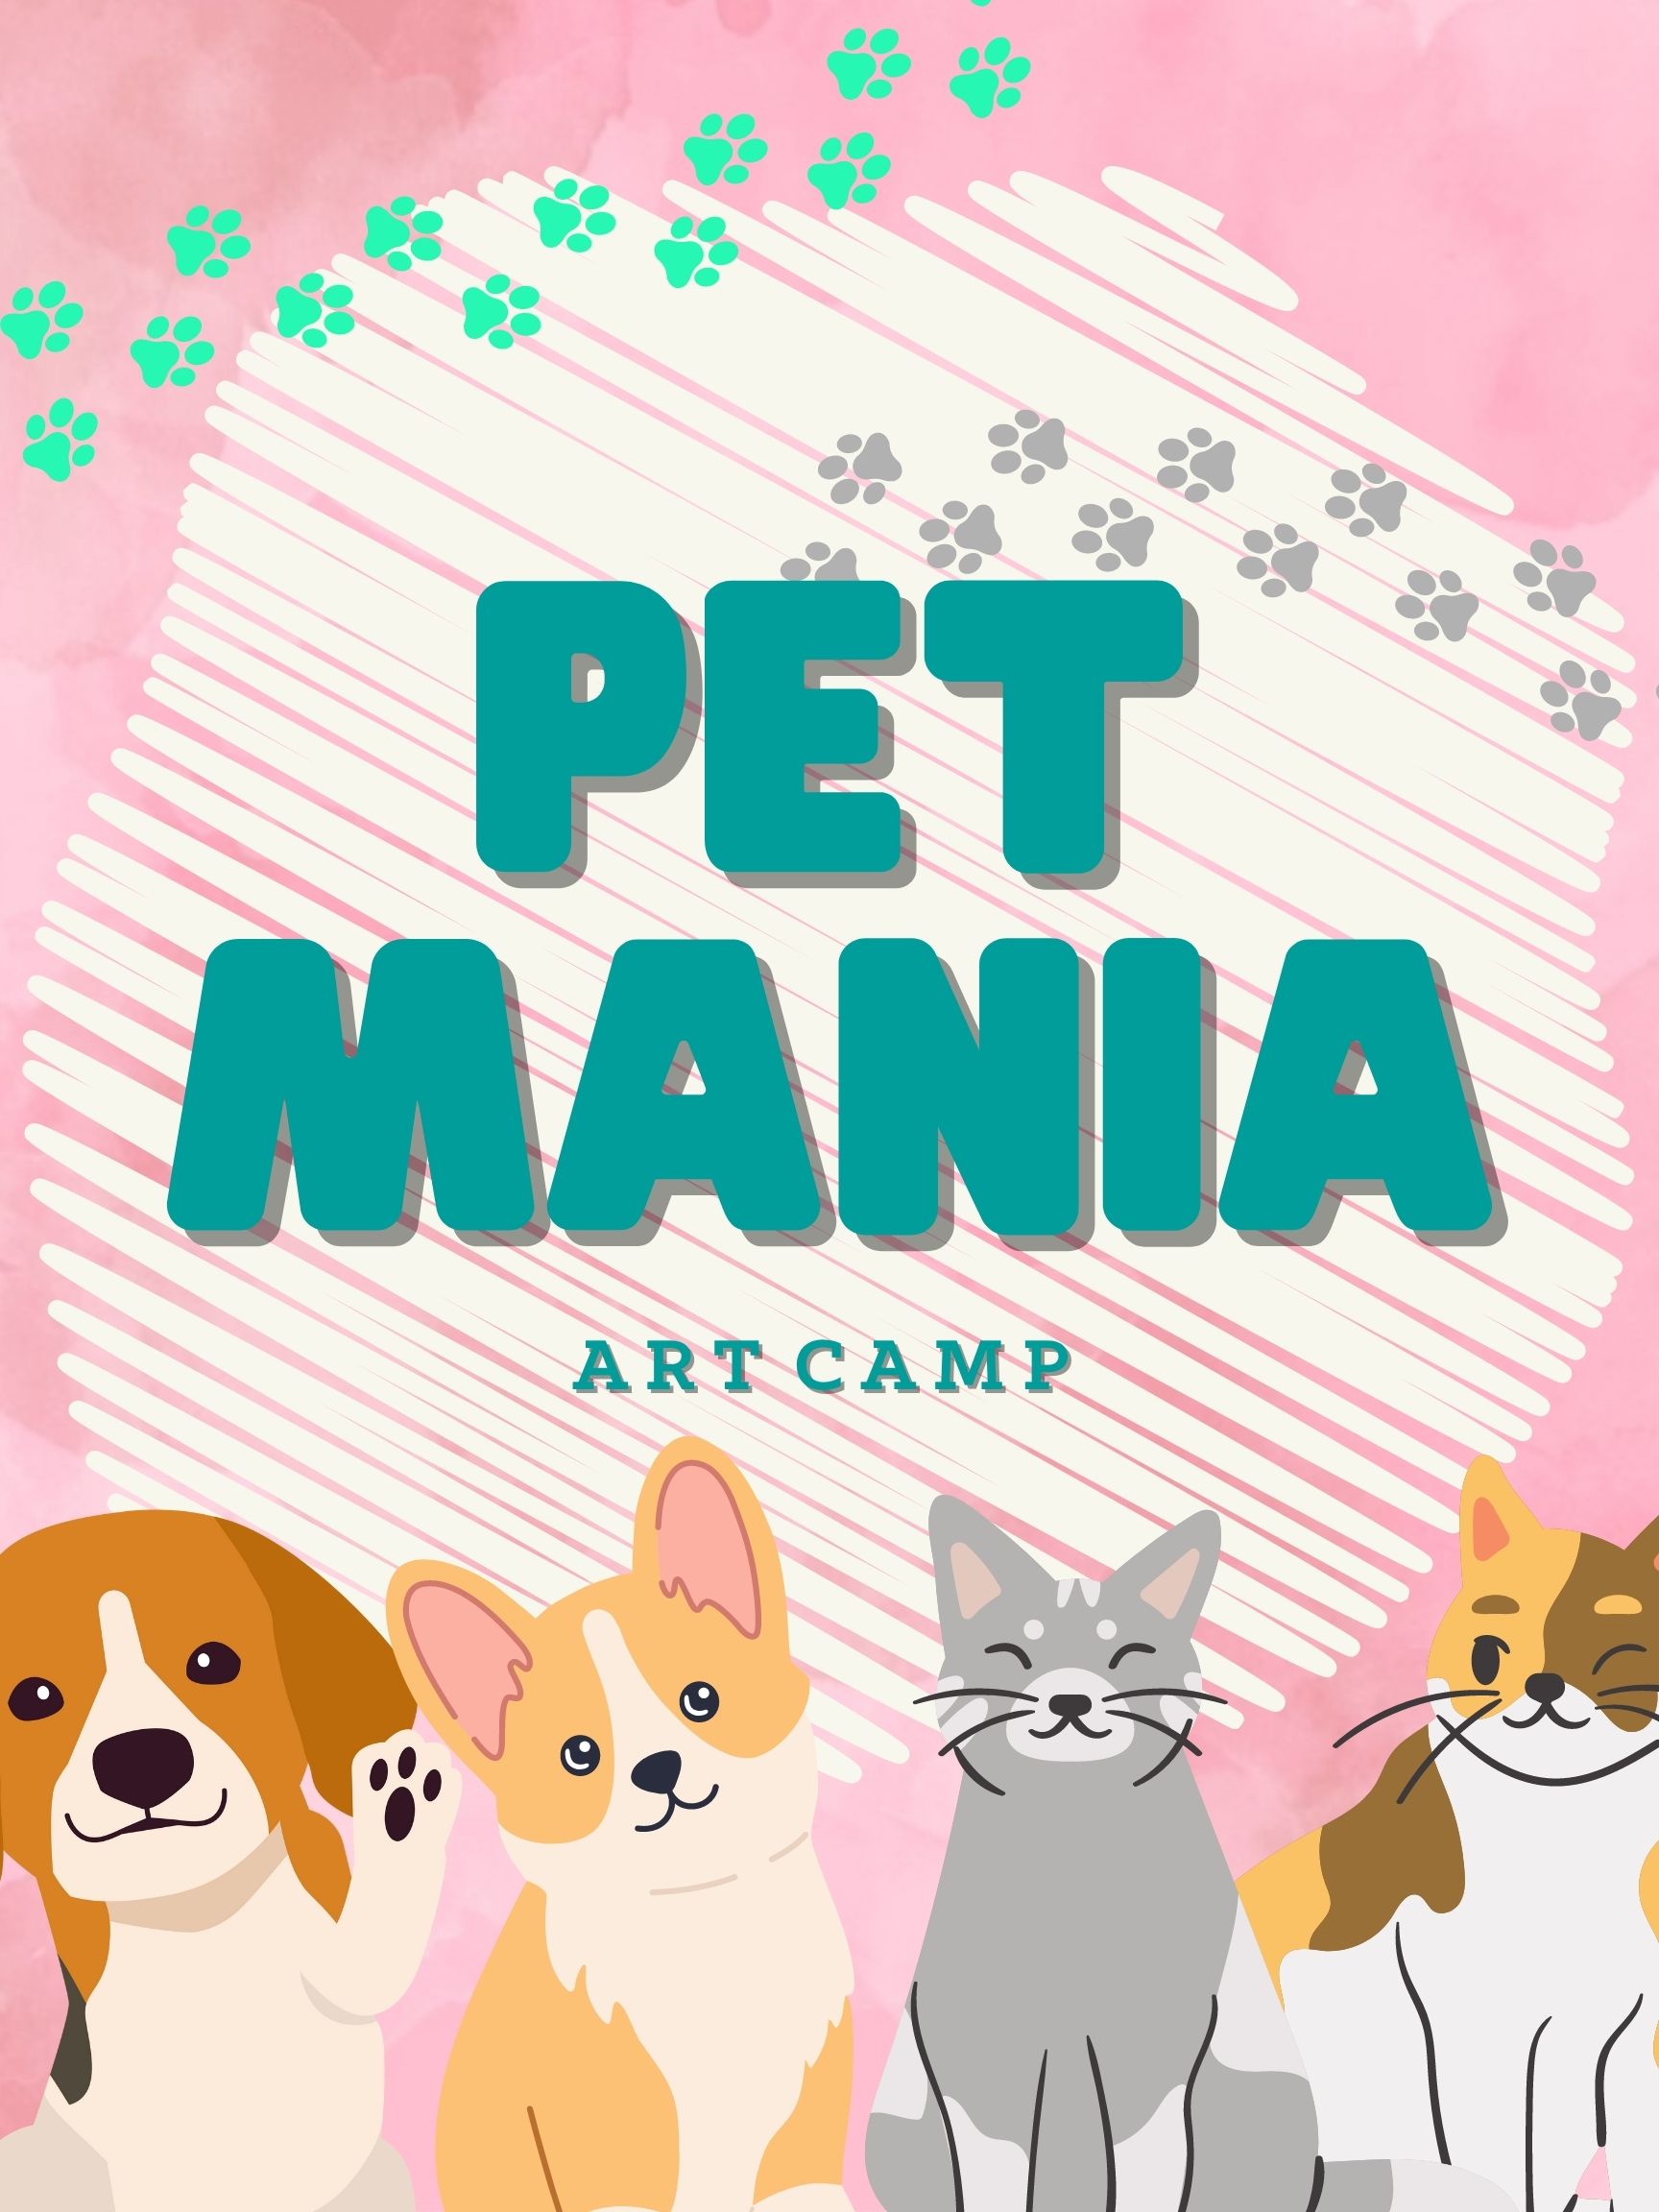 (FULL DAY) Monday-Friday KIDS ART CAMP: Pet Mania